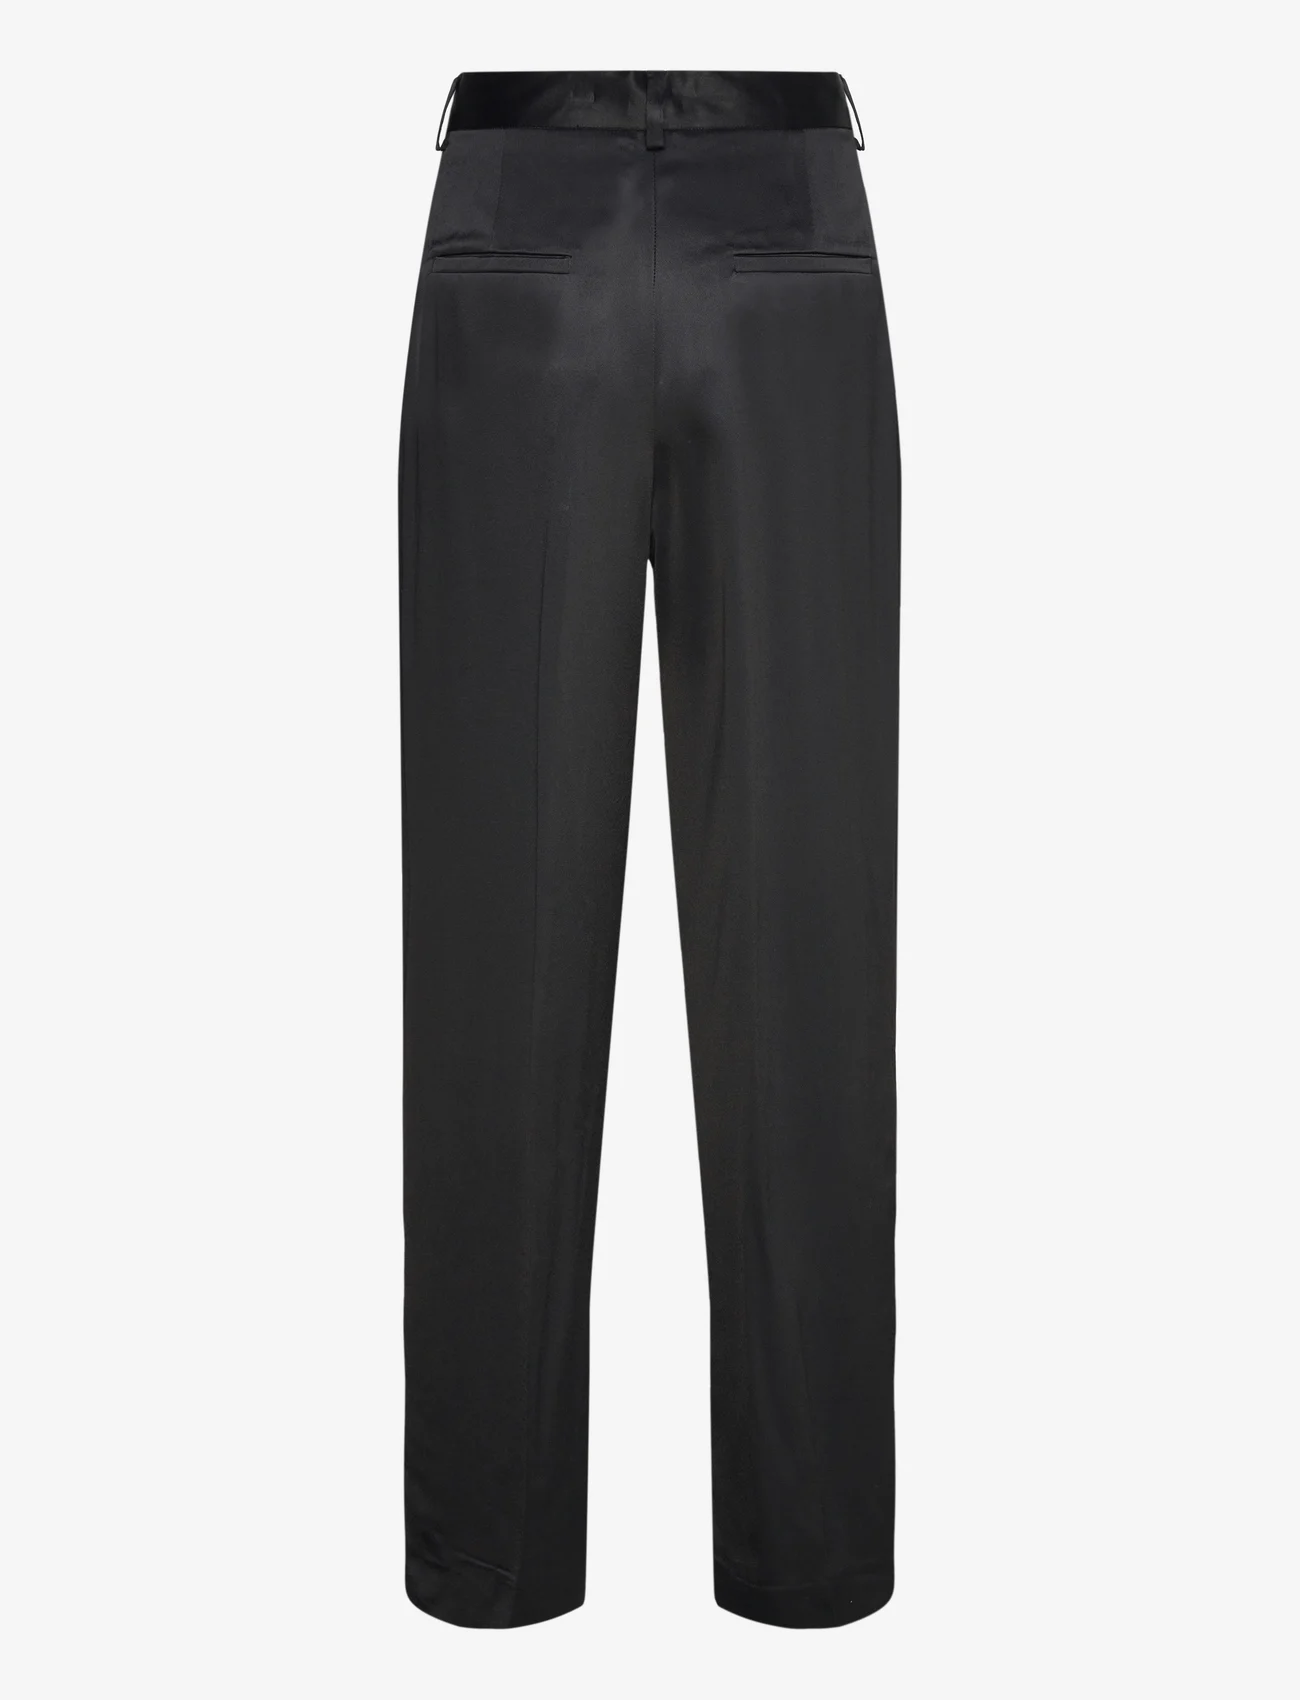 House Of Dagmar - Shiny wide suit pant - dressbukser - black - 1